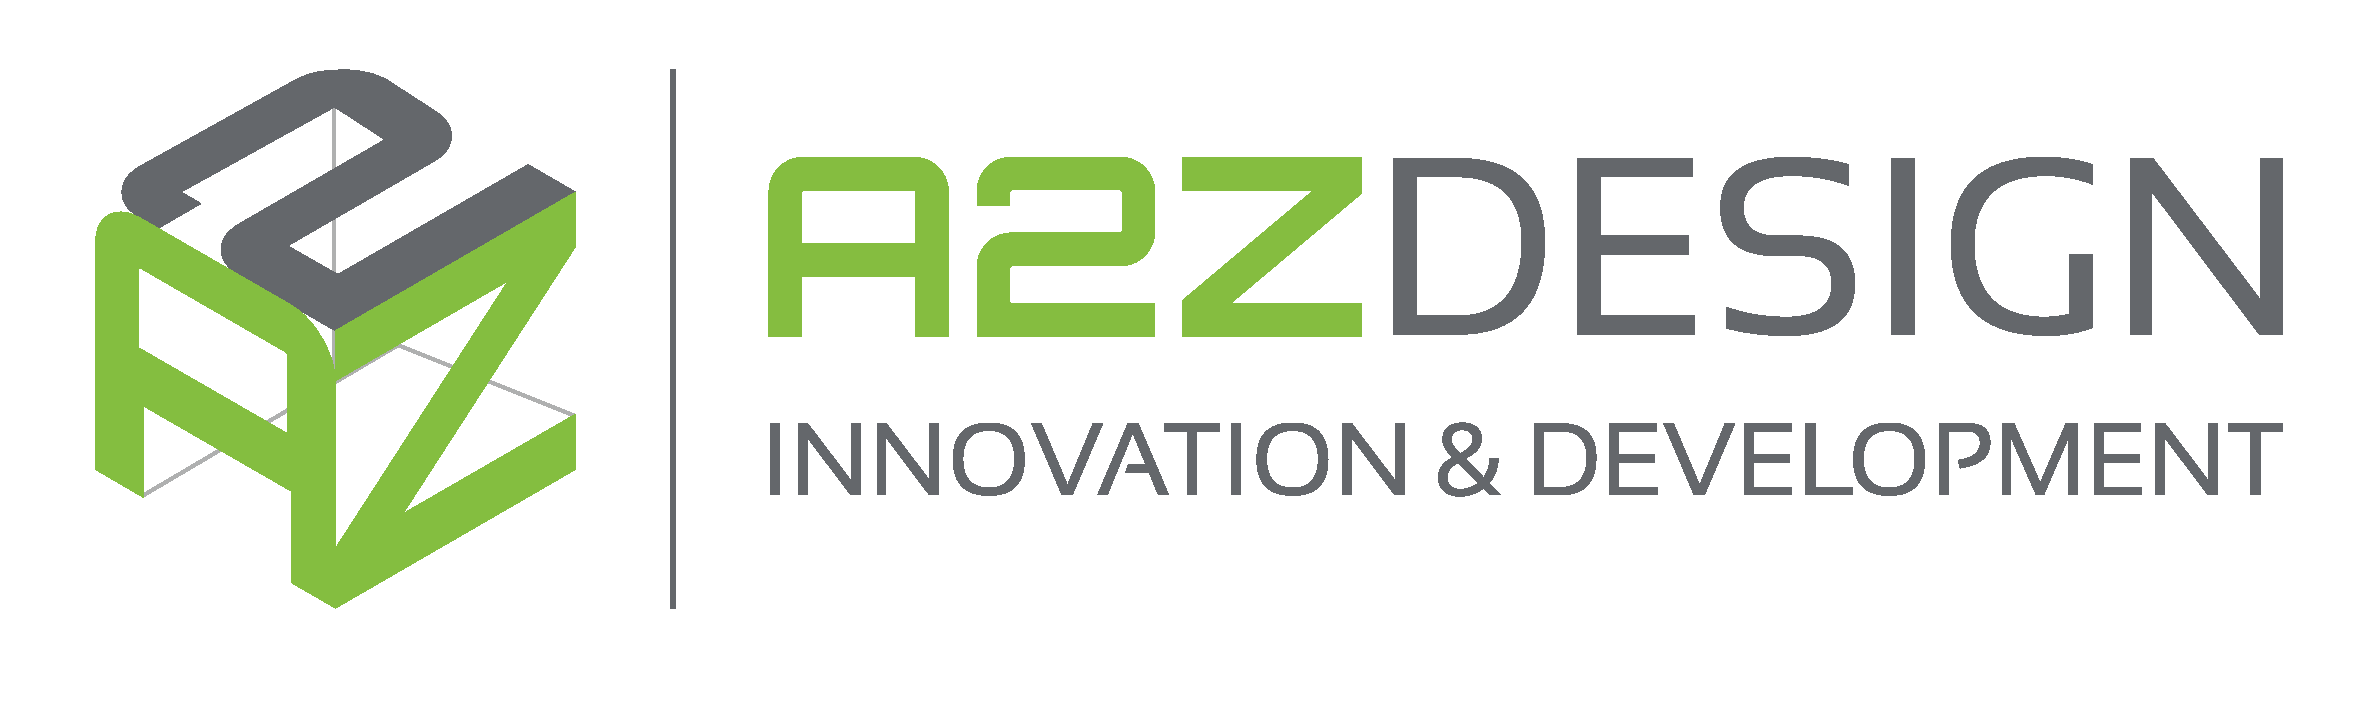 magix: A2z Logo